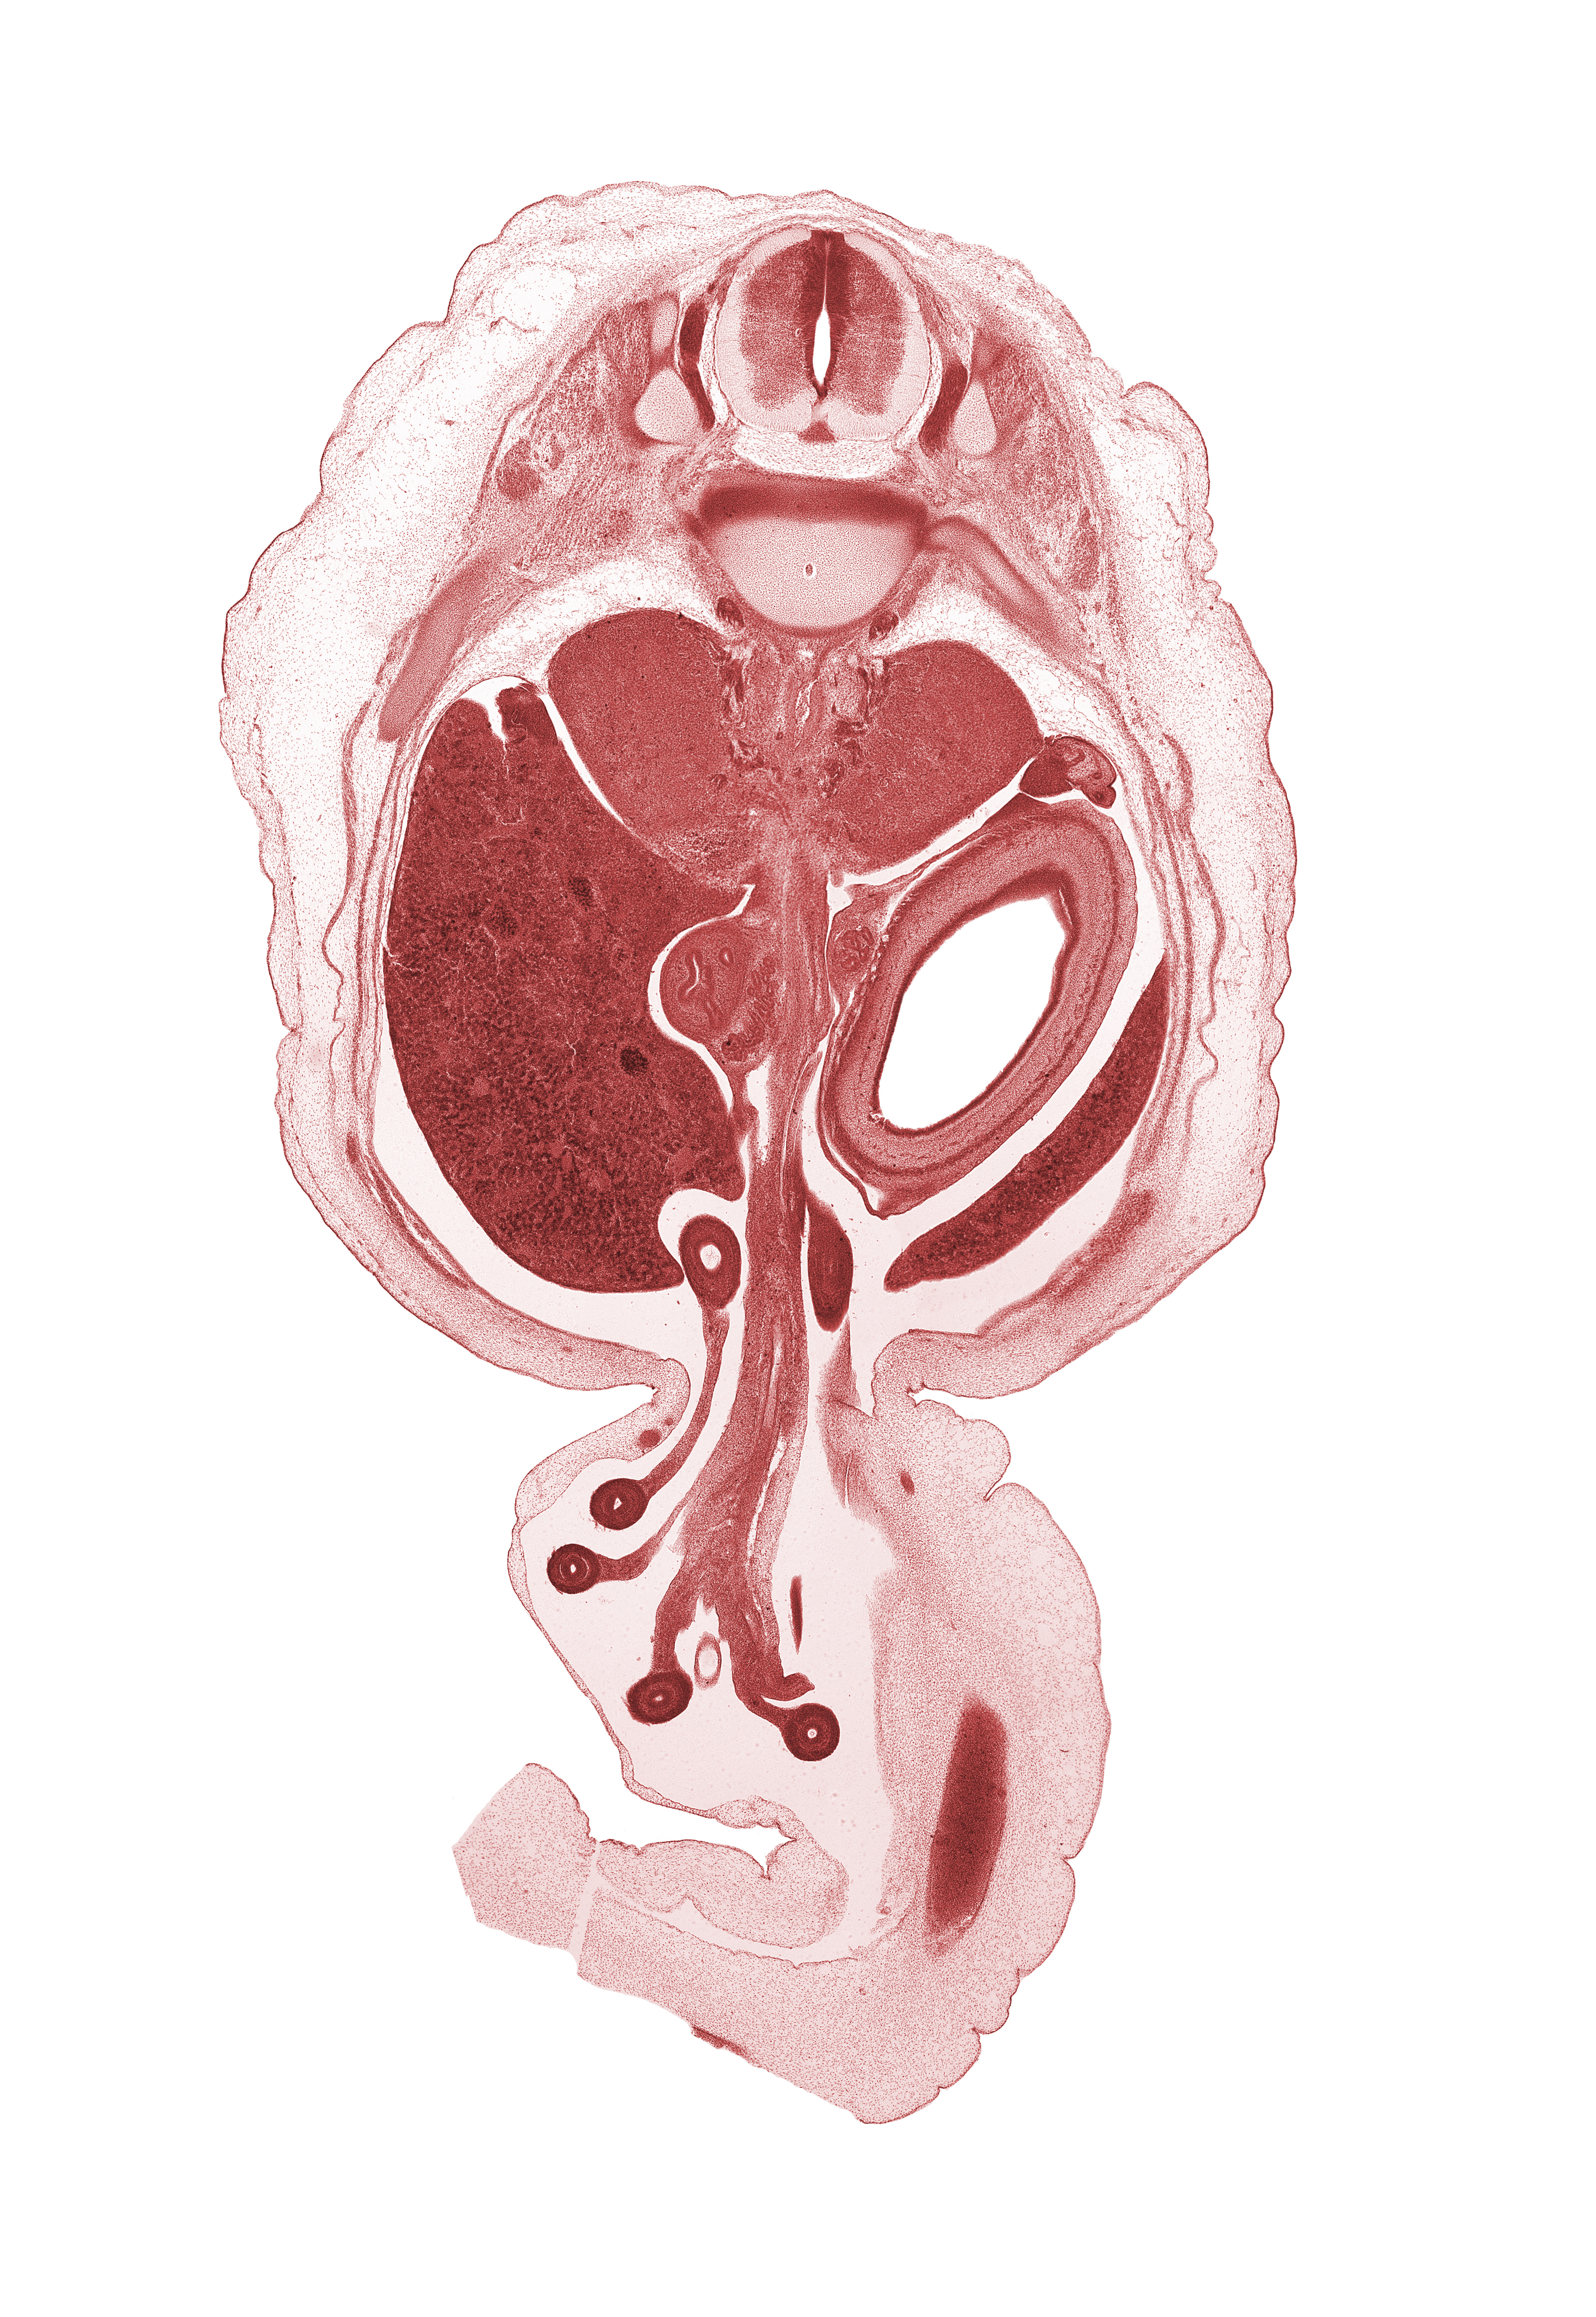 T-11 spinal nerve, T-12 spinal ganglion, allantois, aorta, body of dorsal pancreas, centrum of T-12 vertebra, descending part of duodenum (second part), distal limb of herniated midgut, hindgut (colon), jejunum, left lobe of liver, lumen of body of stomach, omphalomesenteric artery, peritoneal cavity, proximal limb of herniated midgut, rib 12, right lobe of liver, spleen, superior mesenteric artery, suprarenal gland cortex, umbilical coelom, umbilical vein